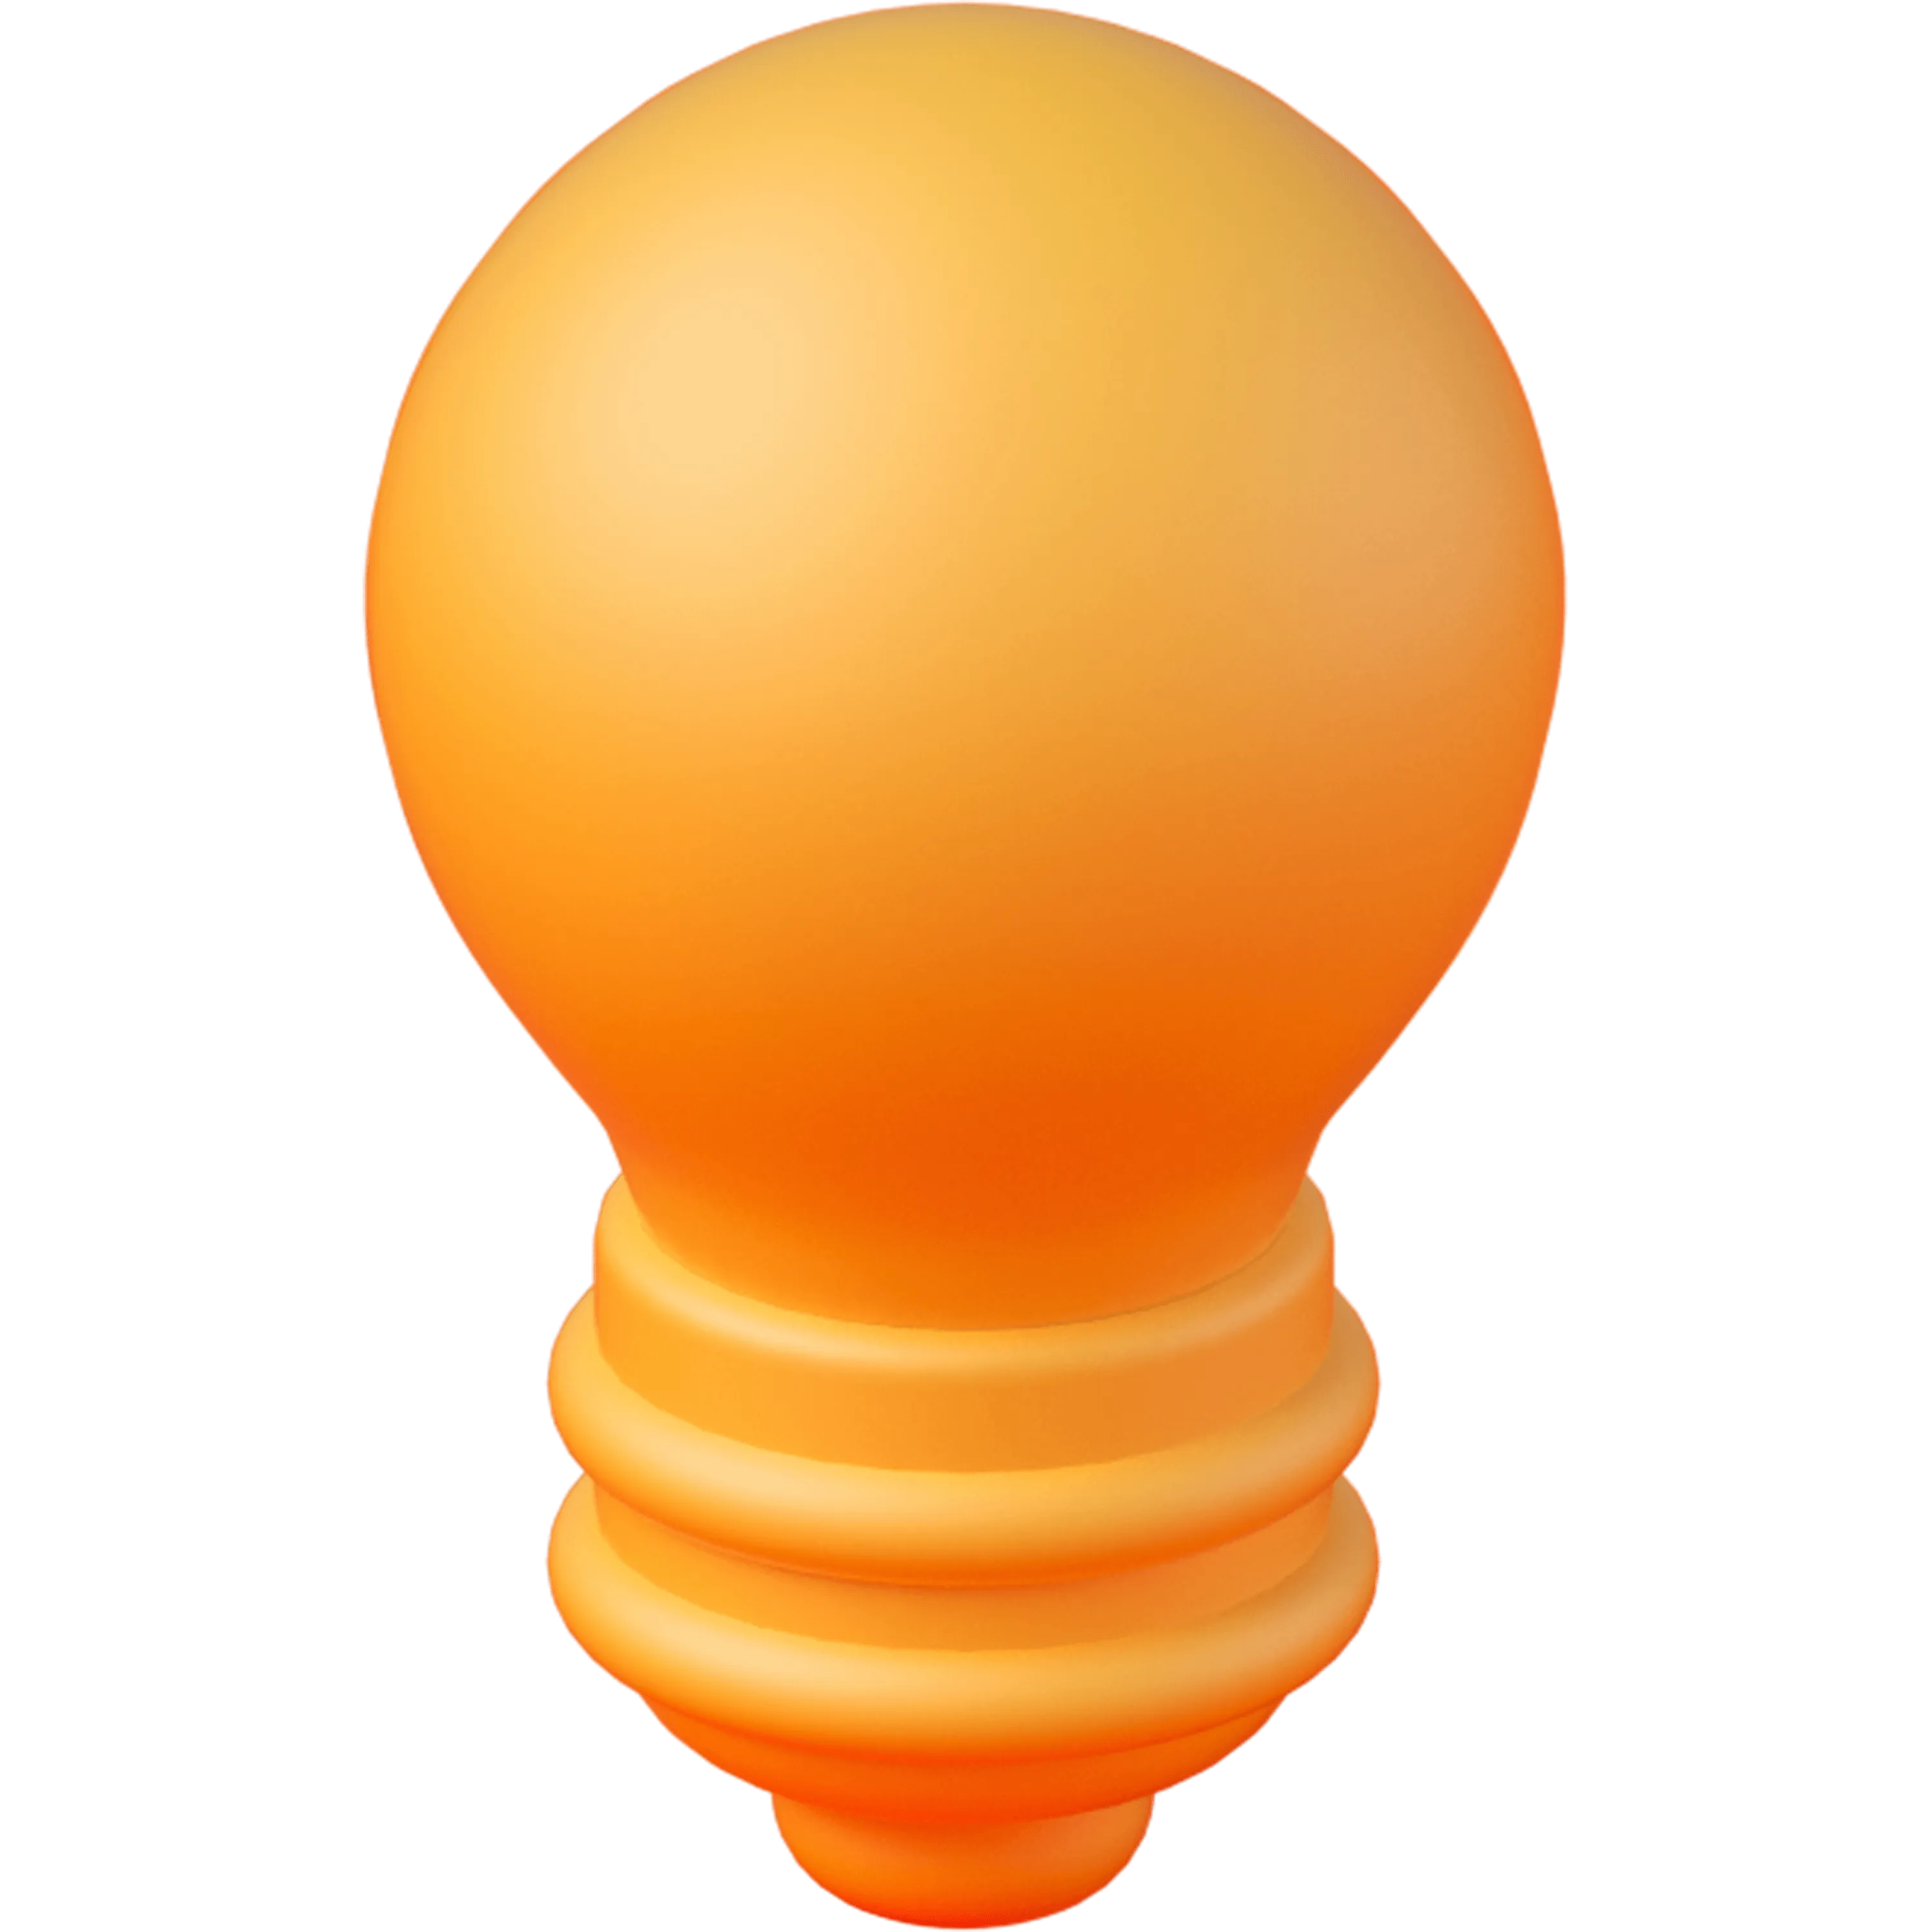 A 3D orange-red light bulb icon.